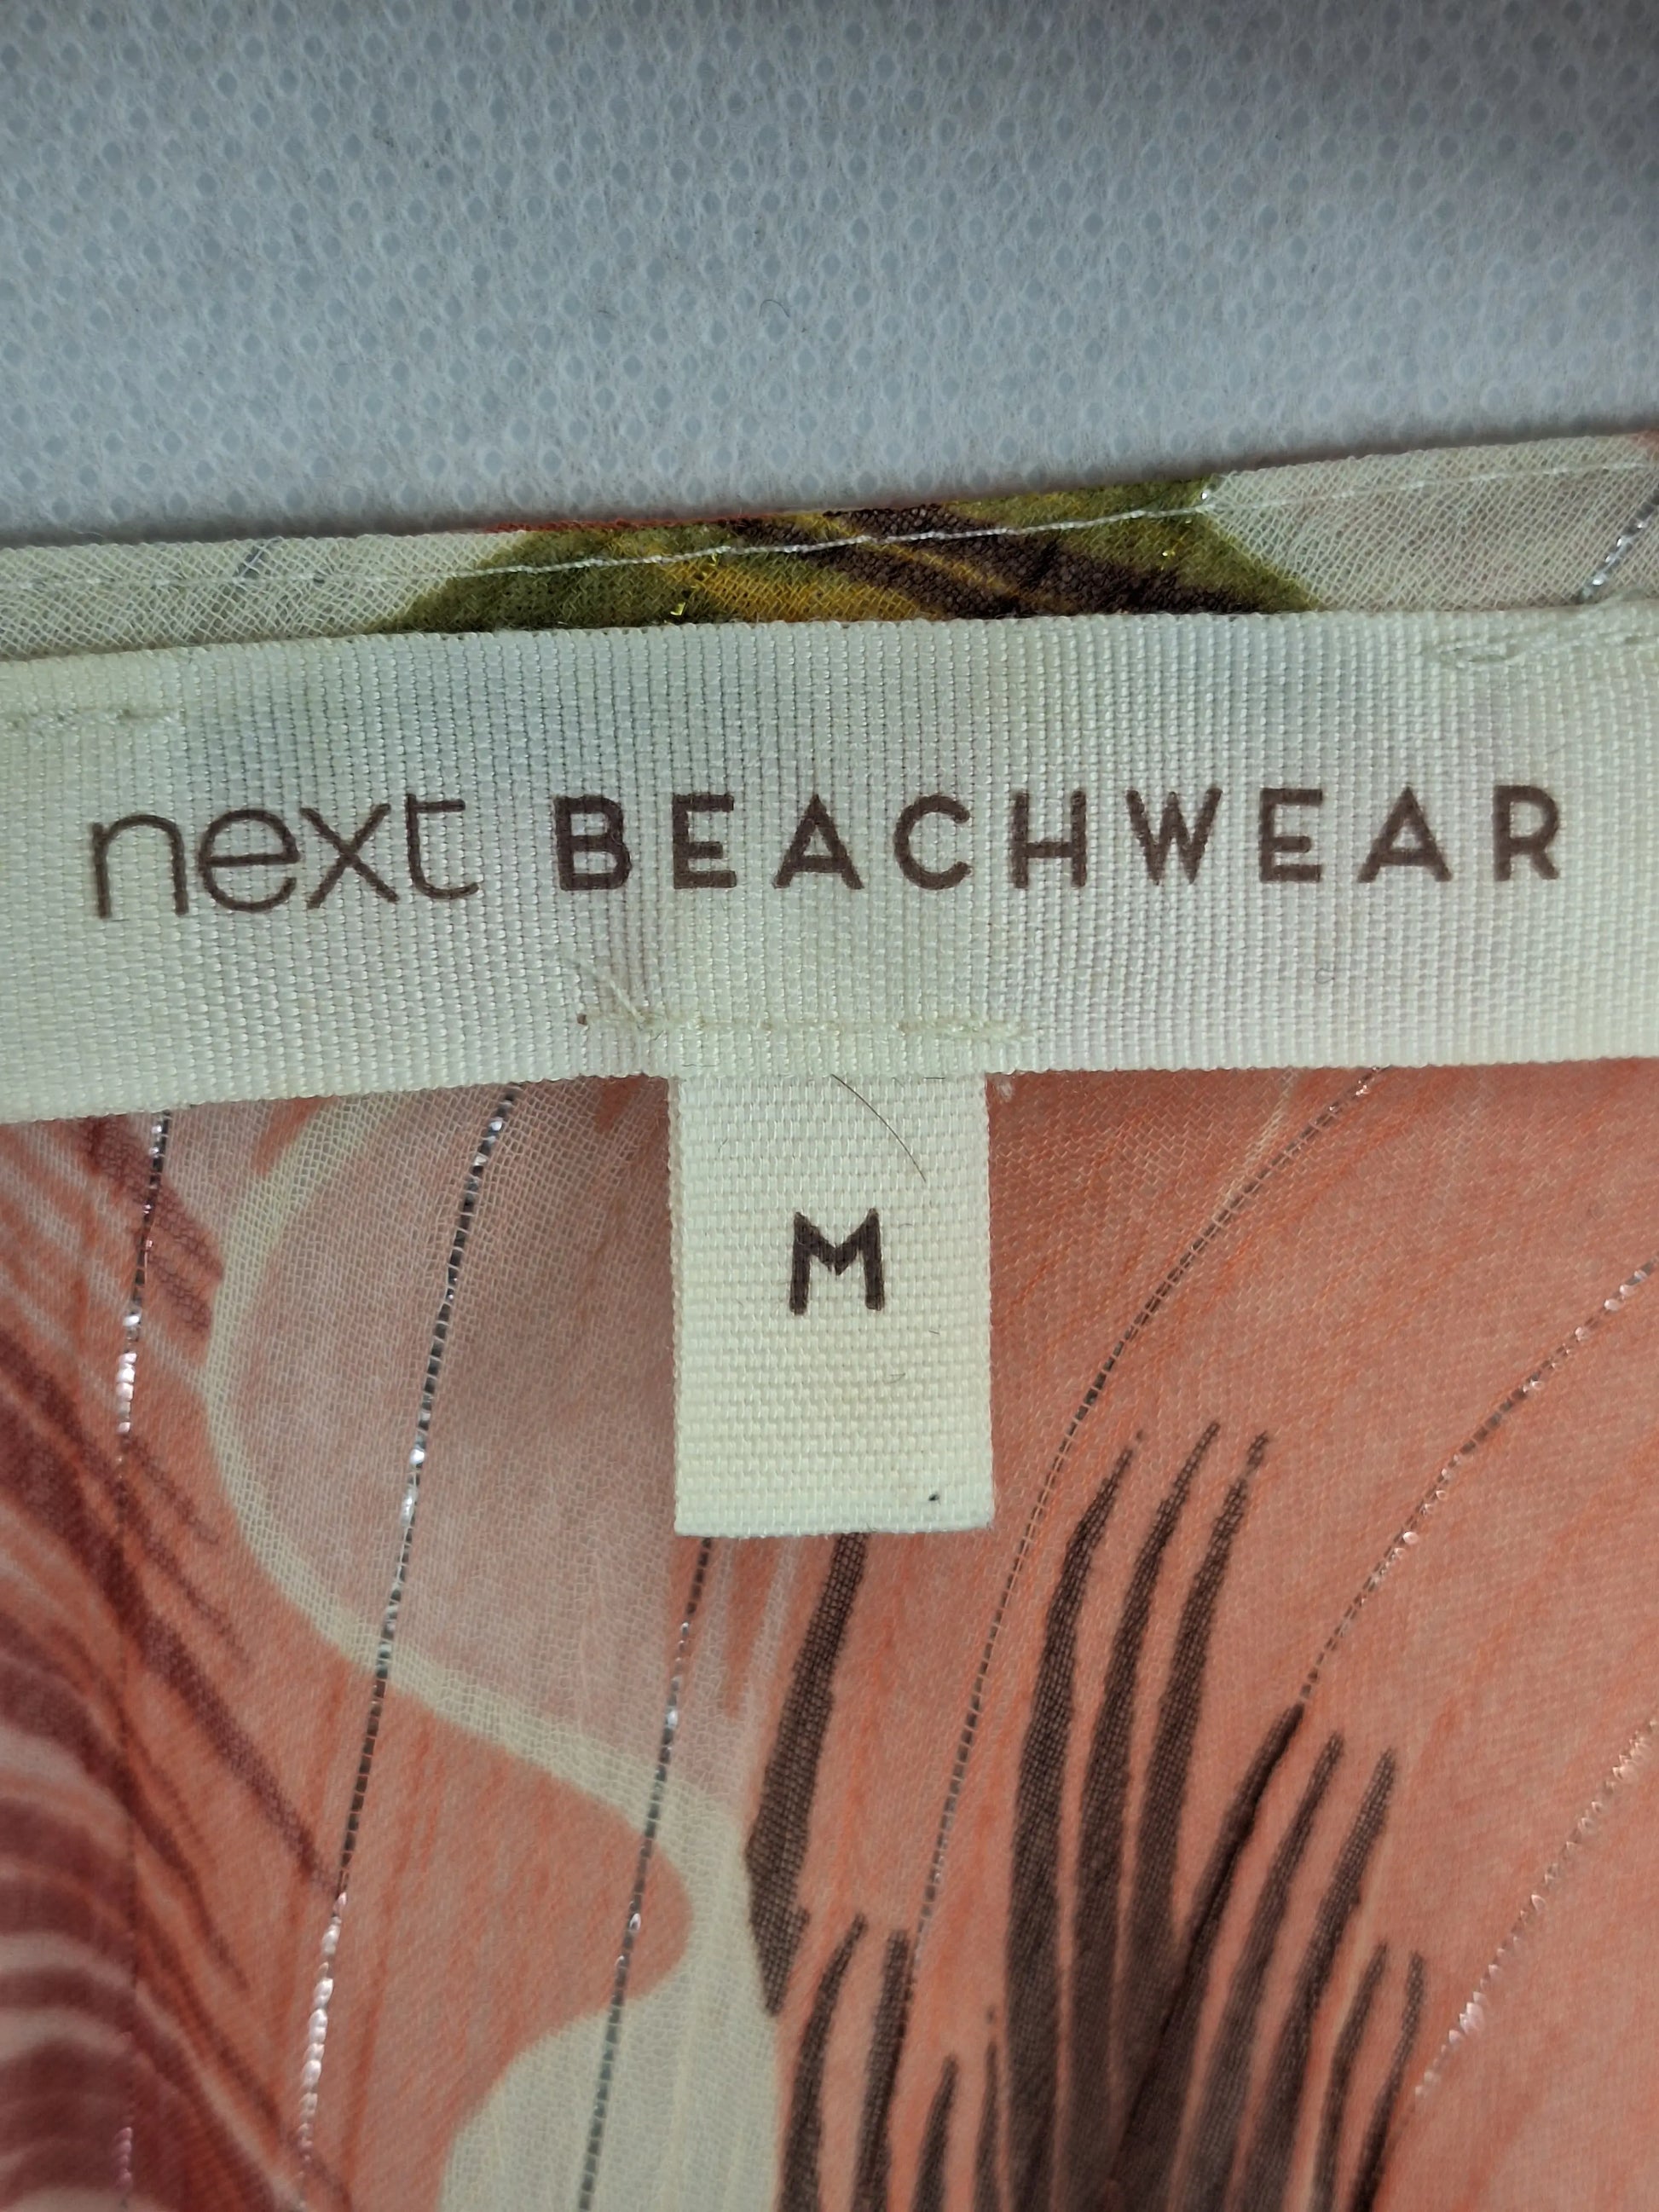 Next Beachwear Metallic Stripe Sheer Beach Cover Up Overswim Size M by SwapUp-Online Second Hand Store-Online Thrift Store